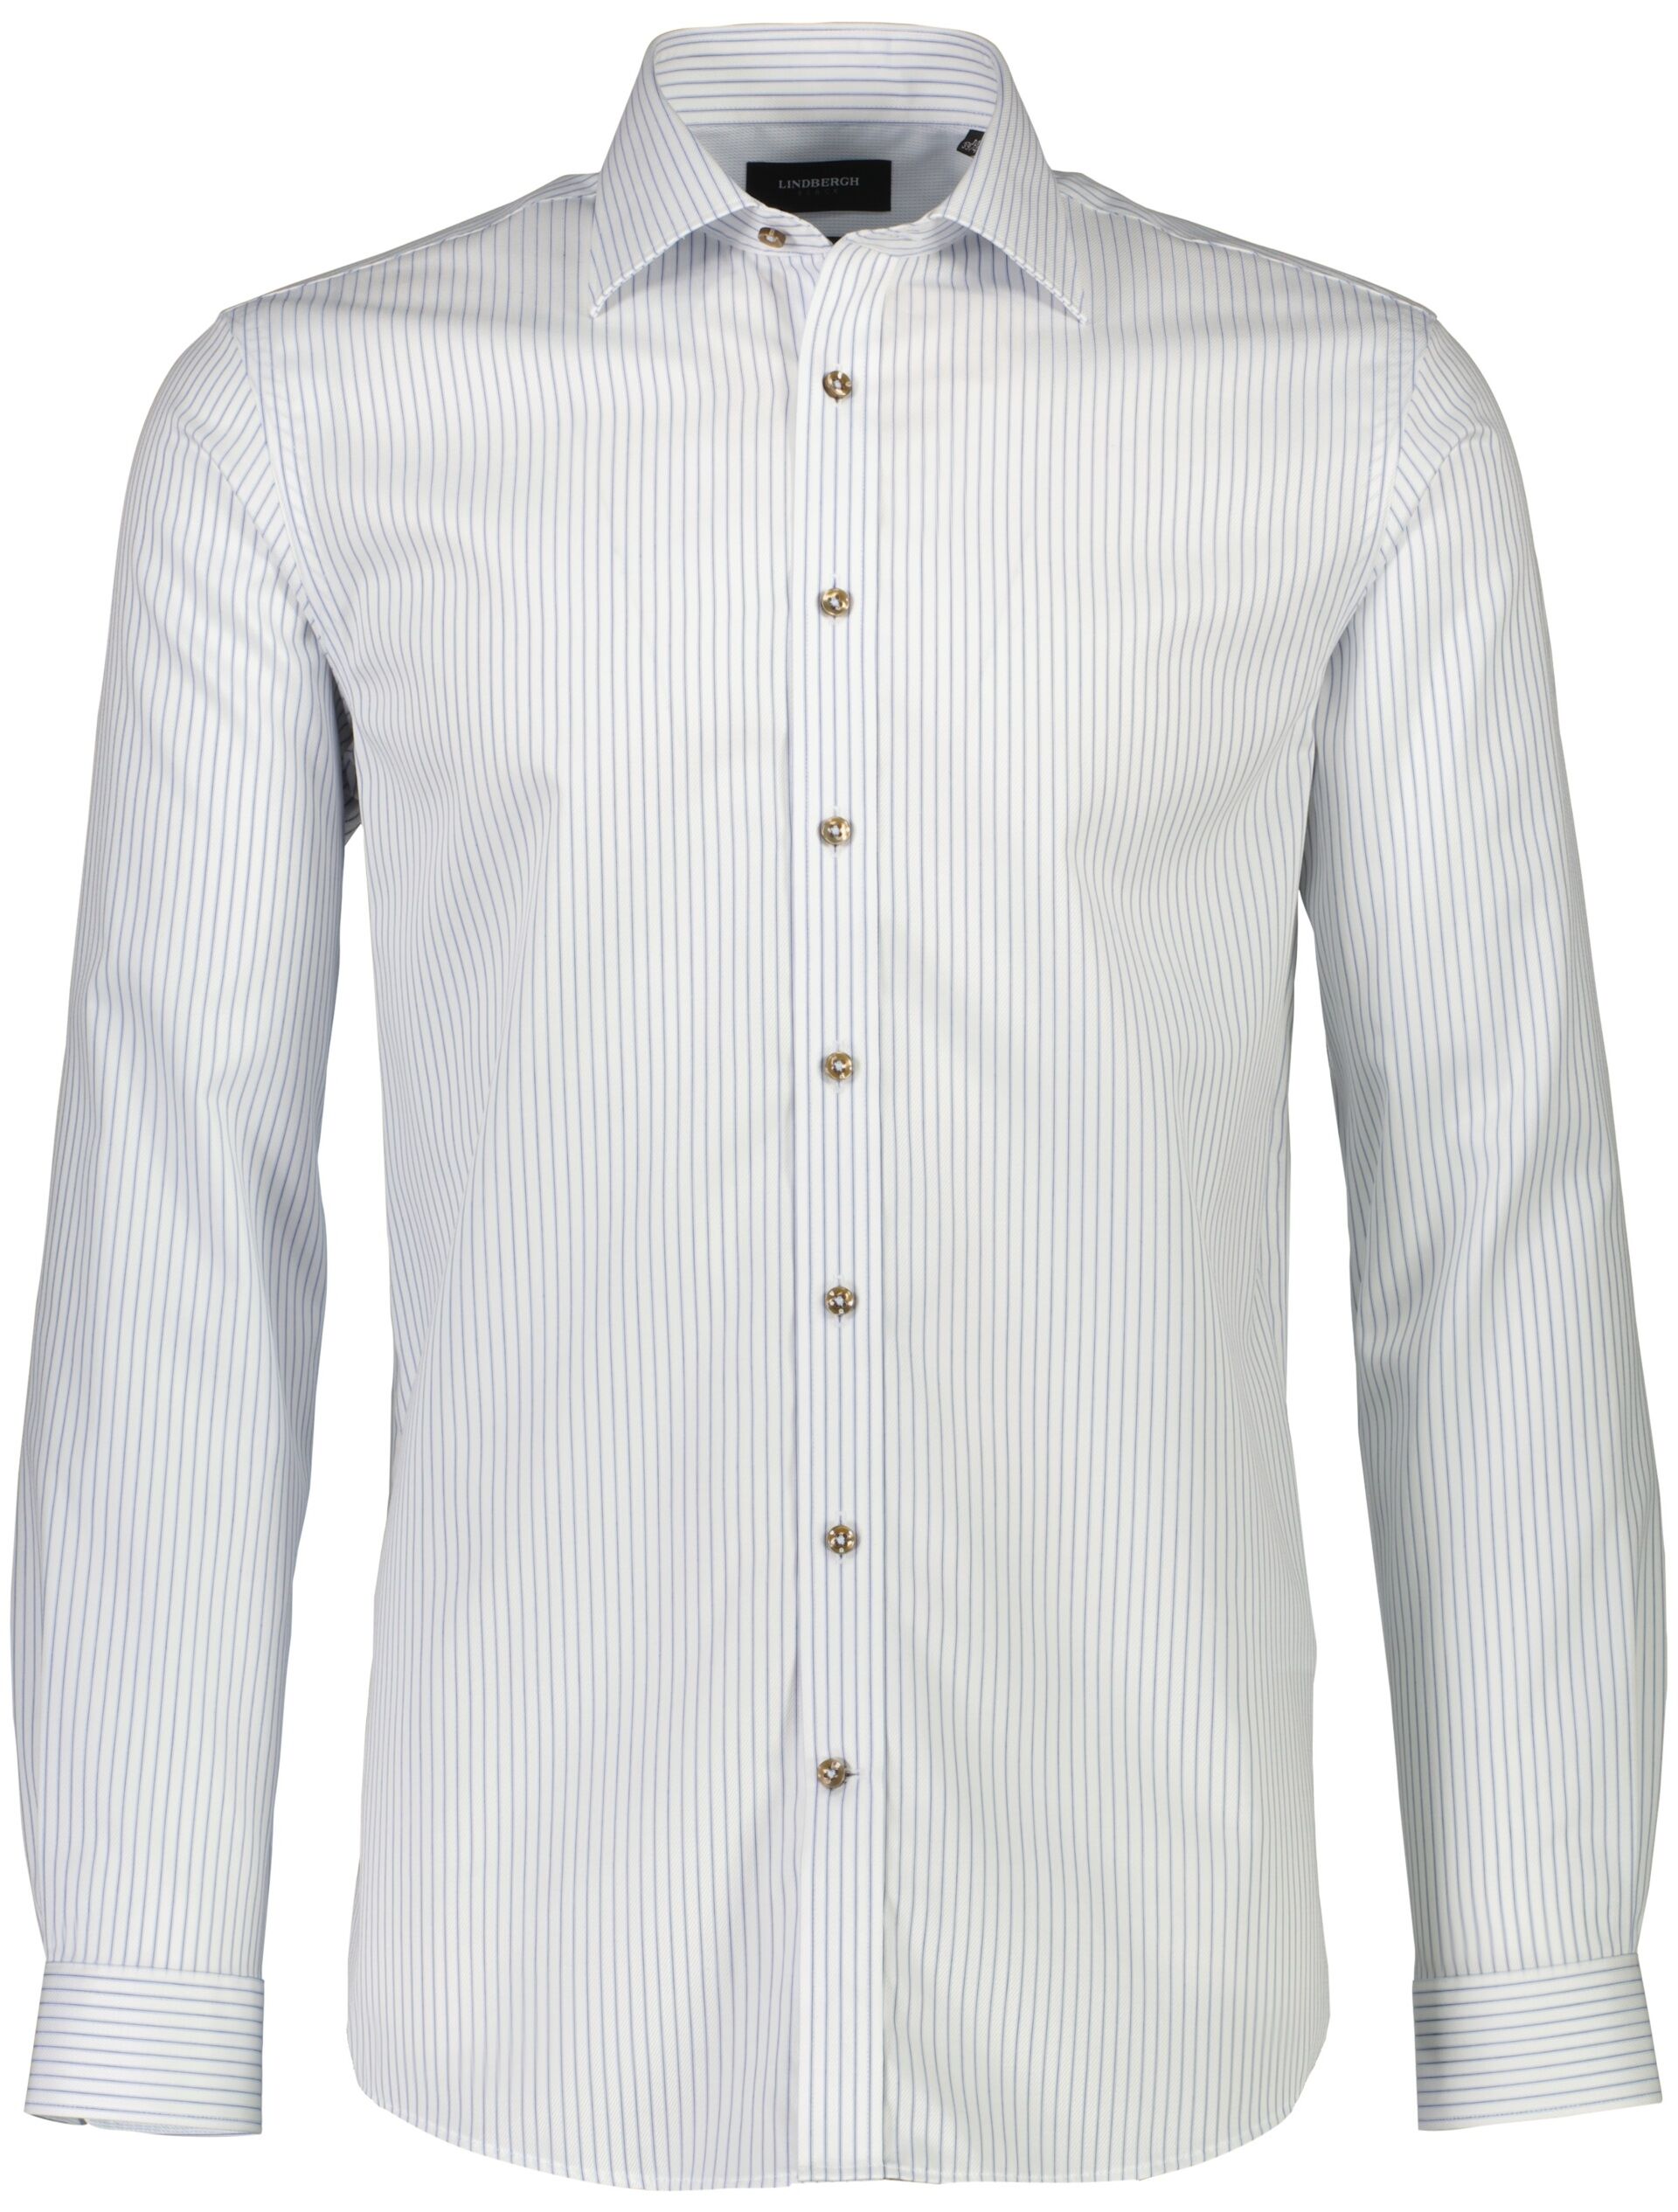 Business casual shirt 30-242200